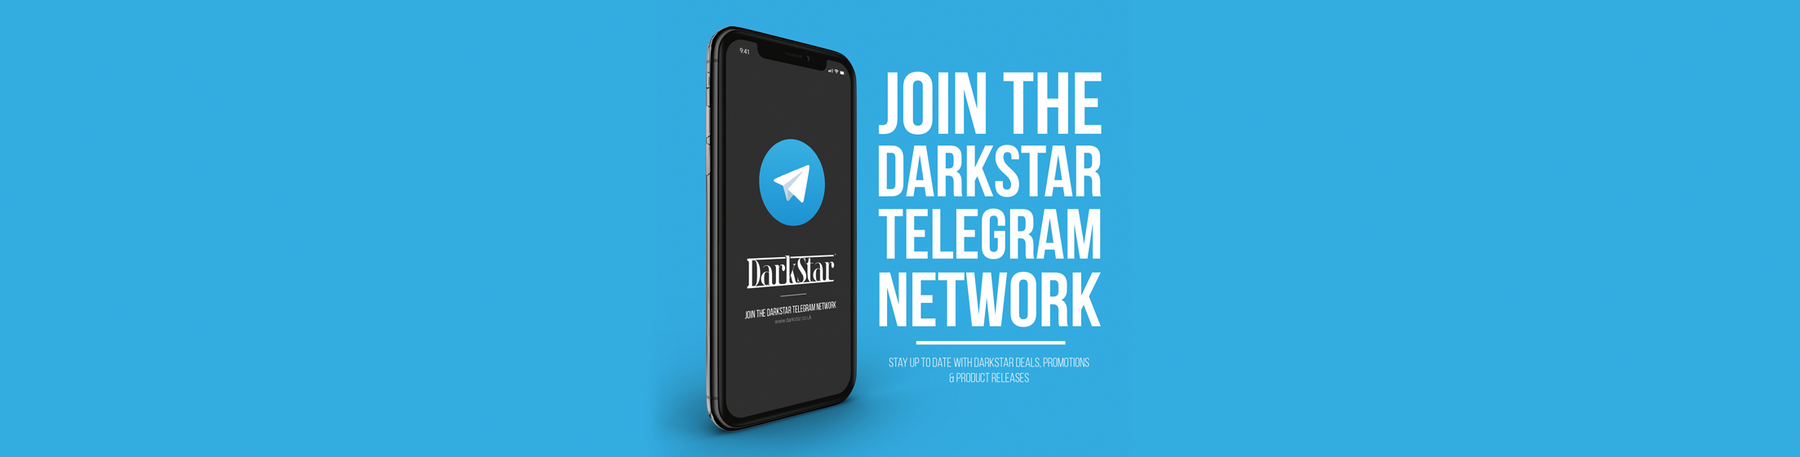 Join The DarkStar Telegram Network!